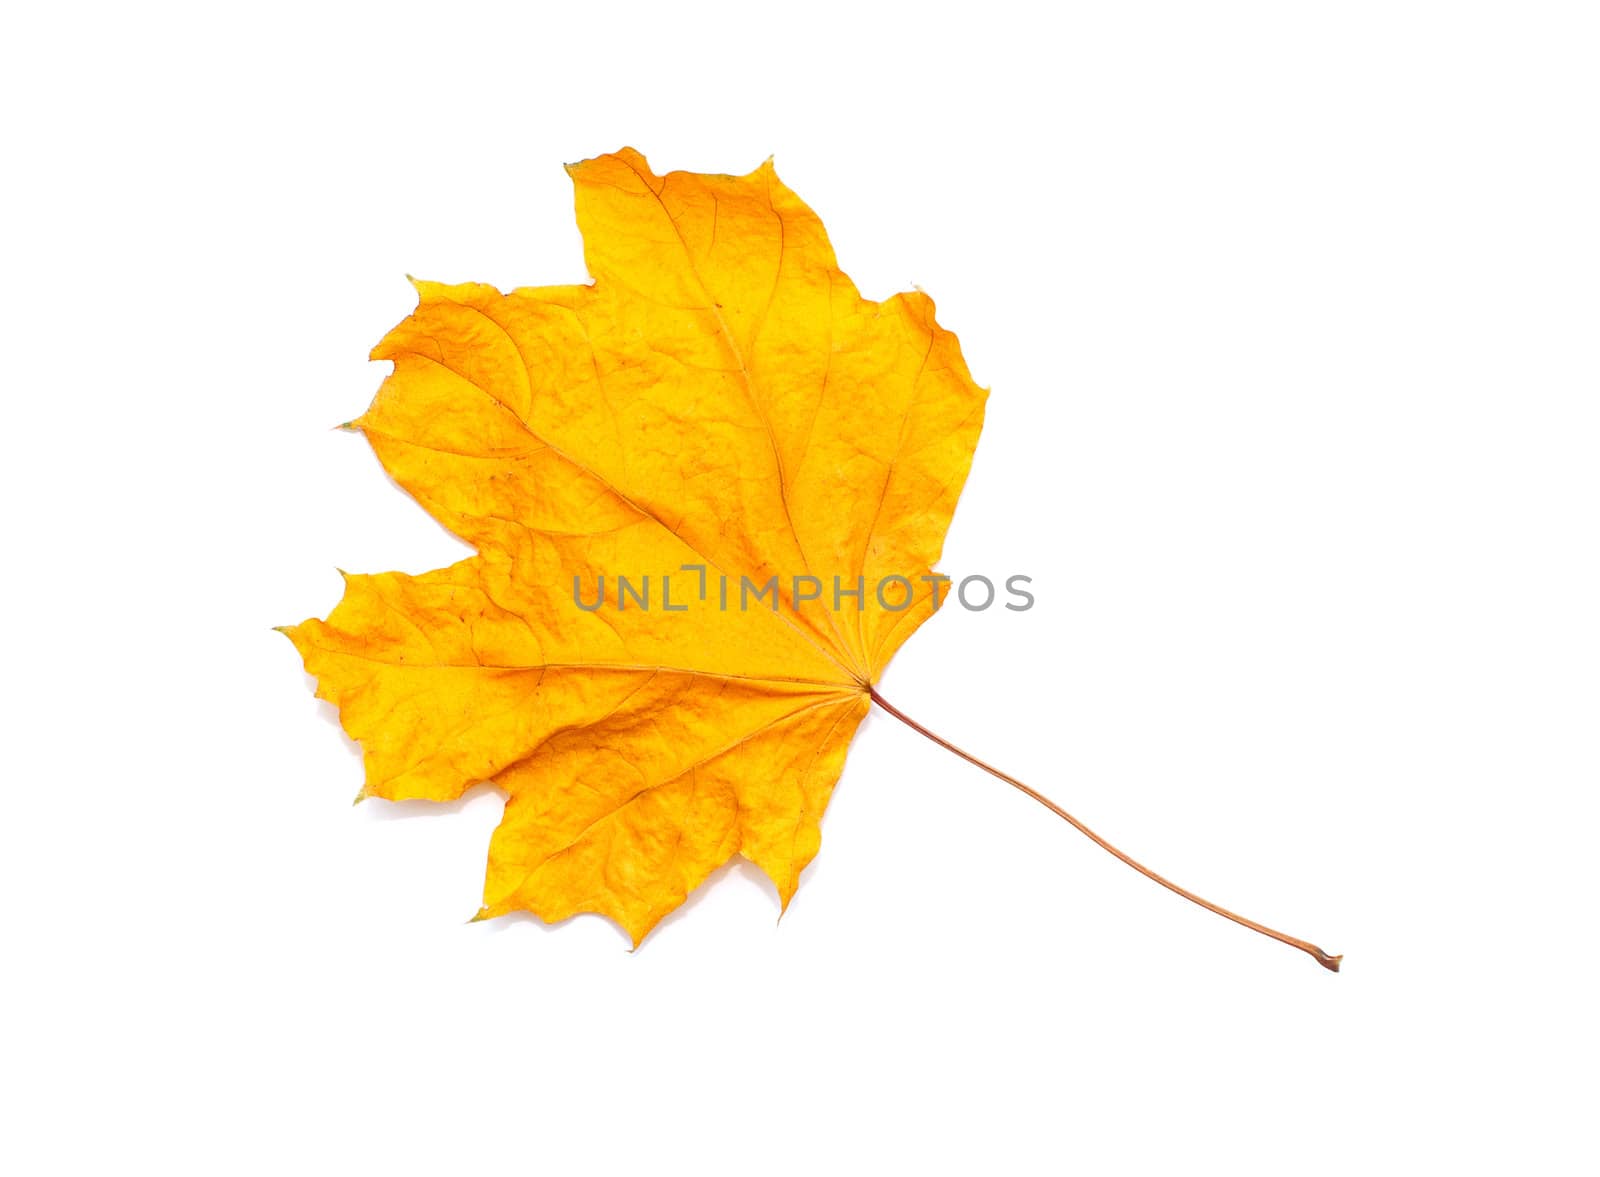 Dry maple leaf by DNKSTUDIO